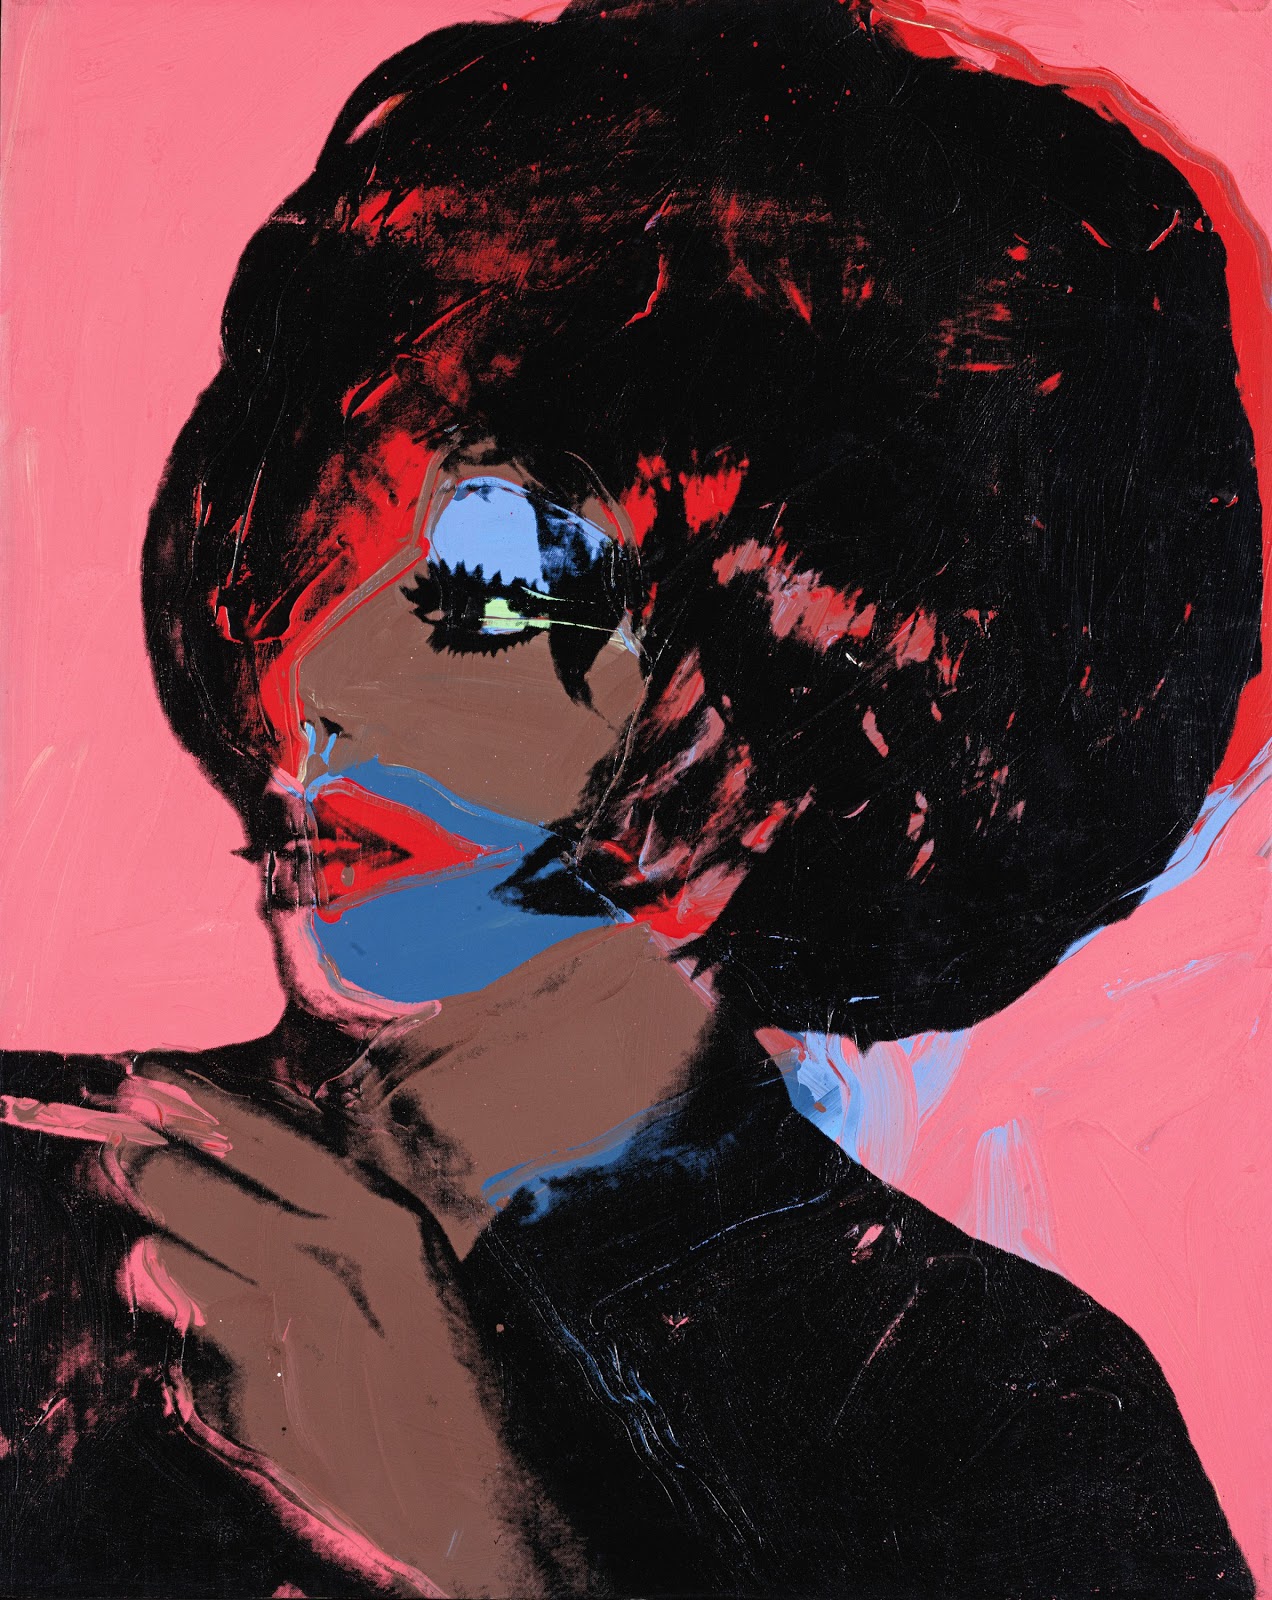 Andy+Warhol-1928-1987 (90).jpg